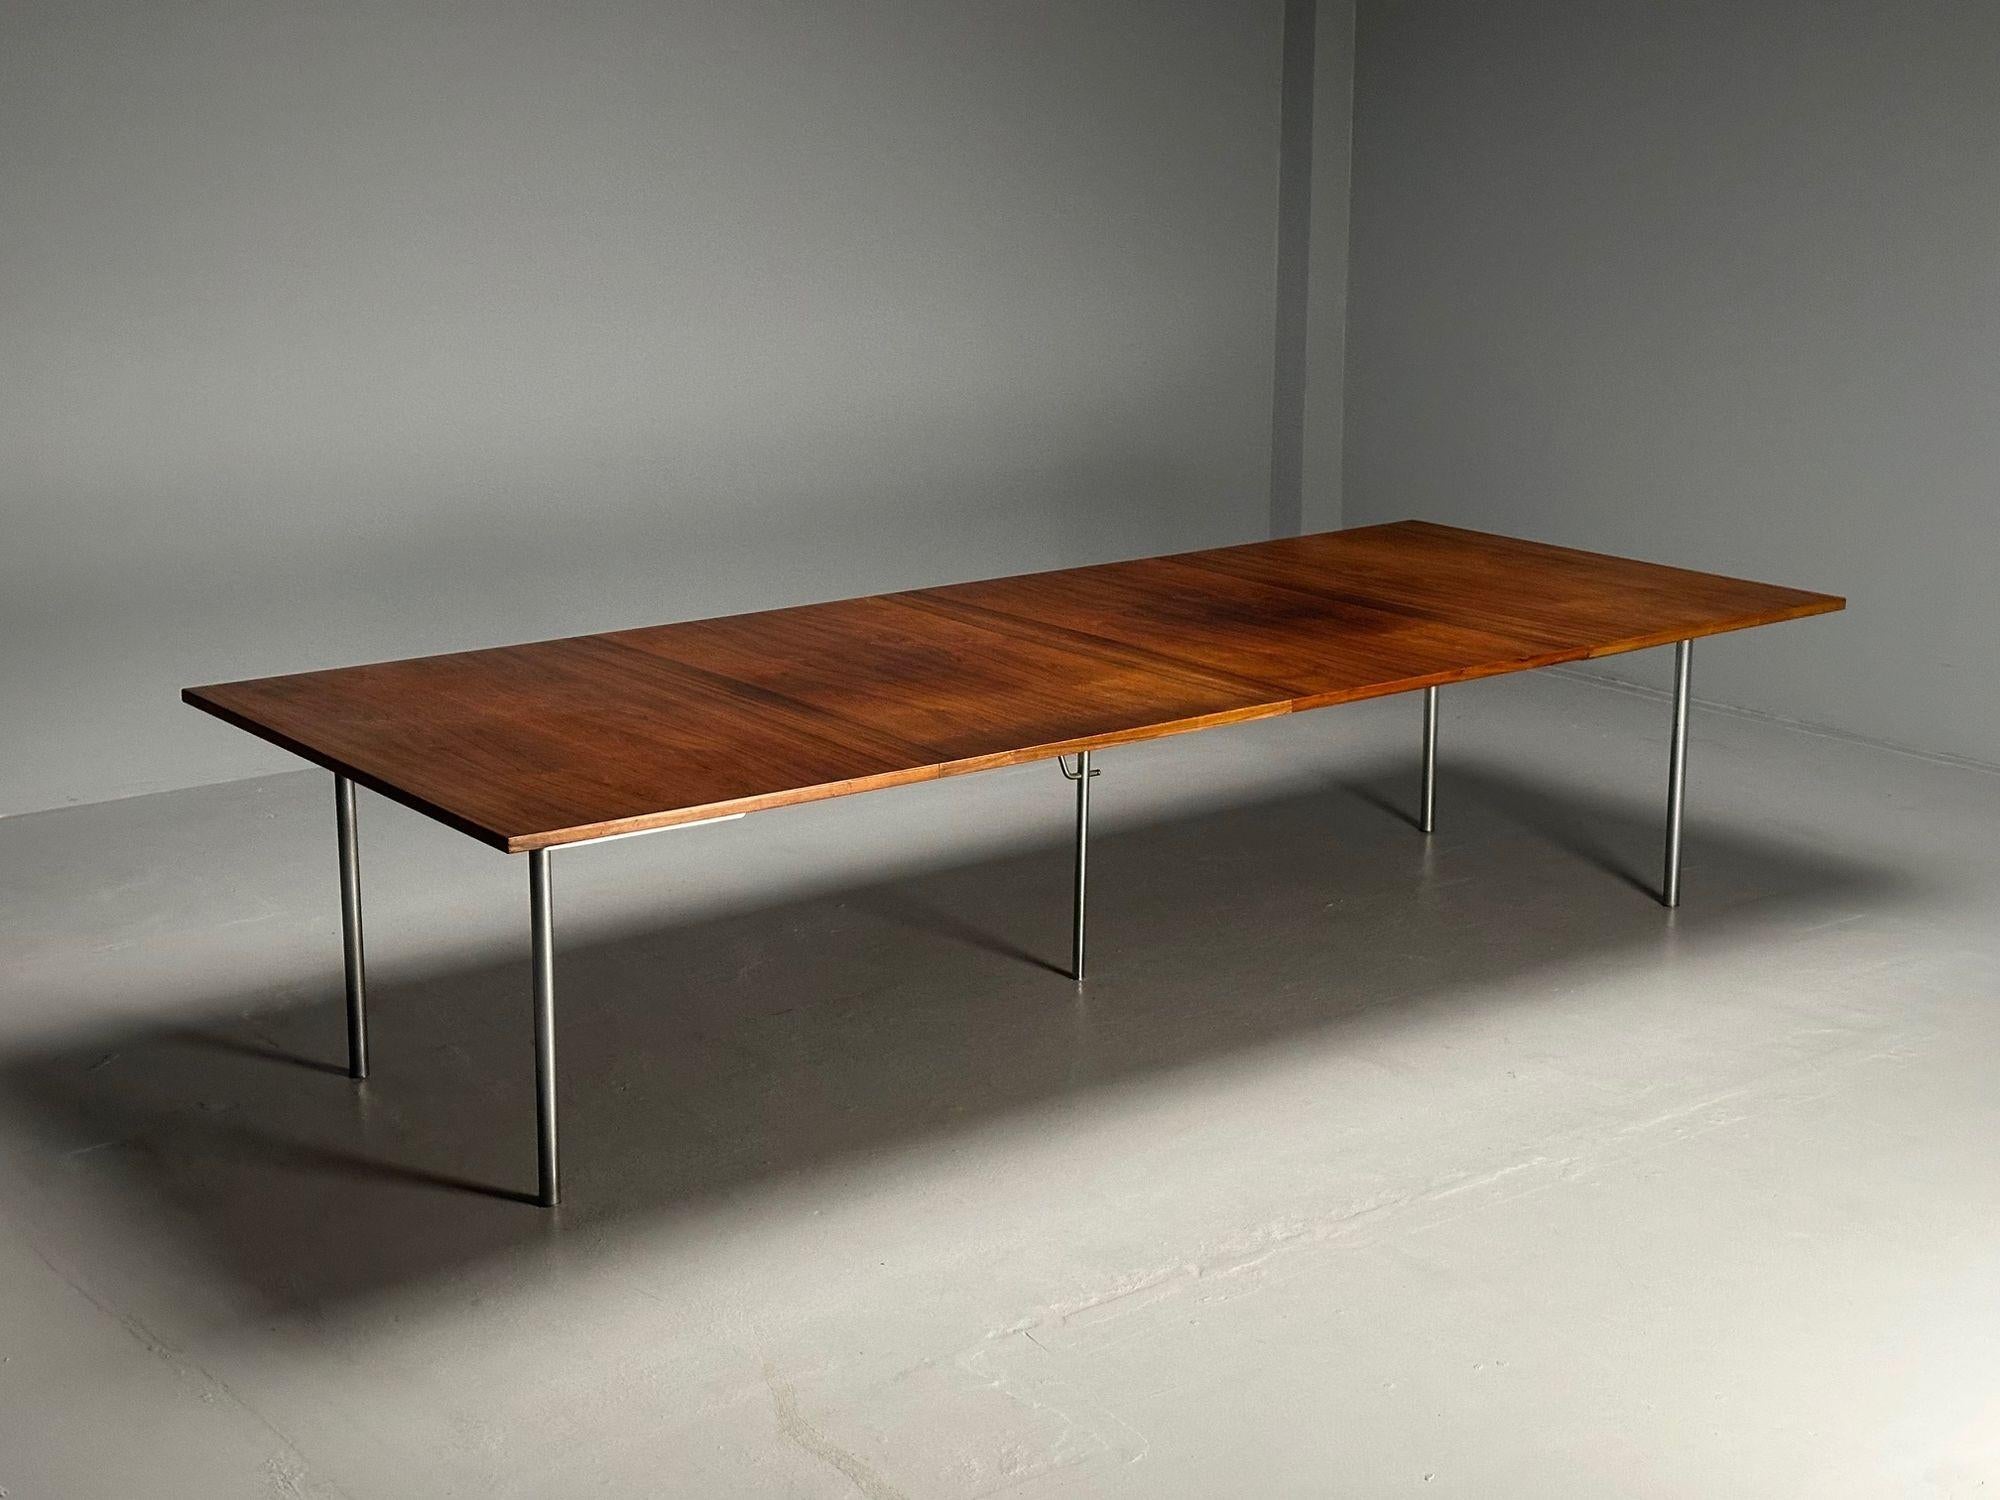 Late 20th Century Hans Wegner, Mid-Century Modern Dining Table, Rosewood, Chrome, Denmark, 1970s